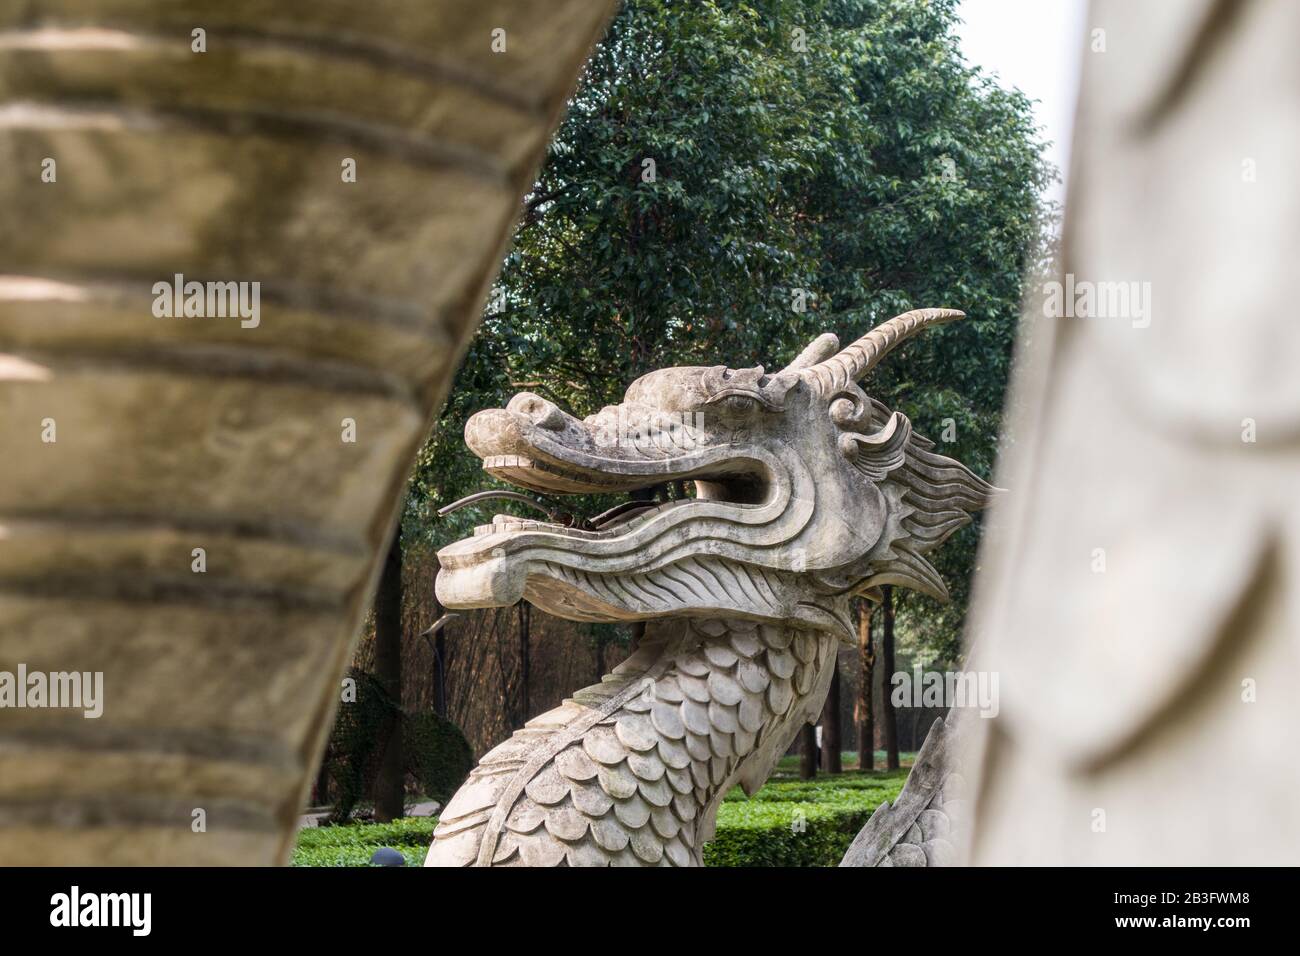 A big dragon head statue in a green park Stock Photo